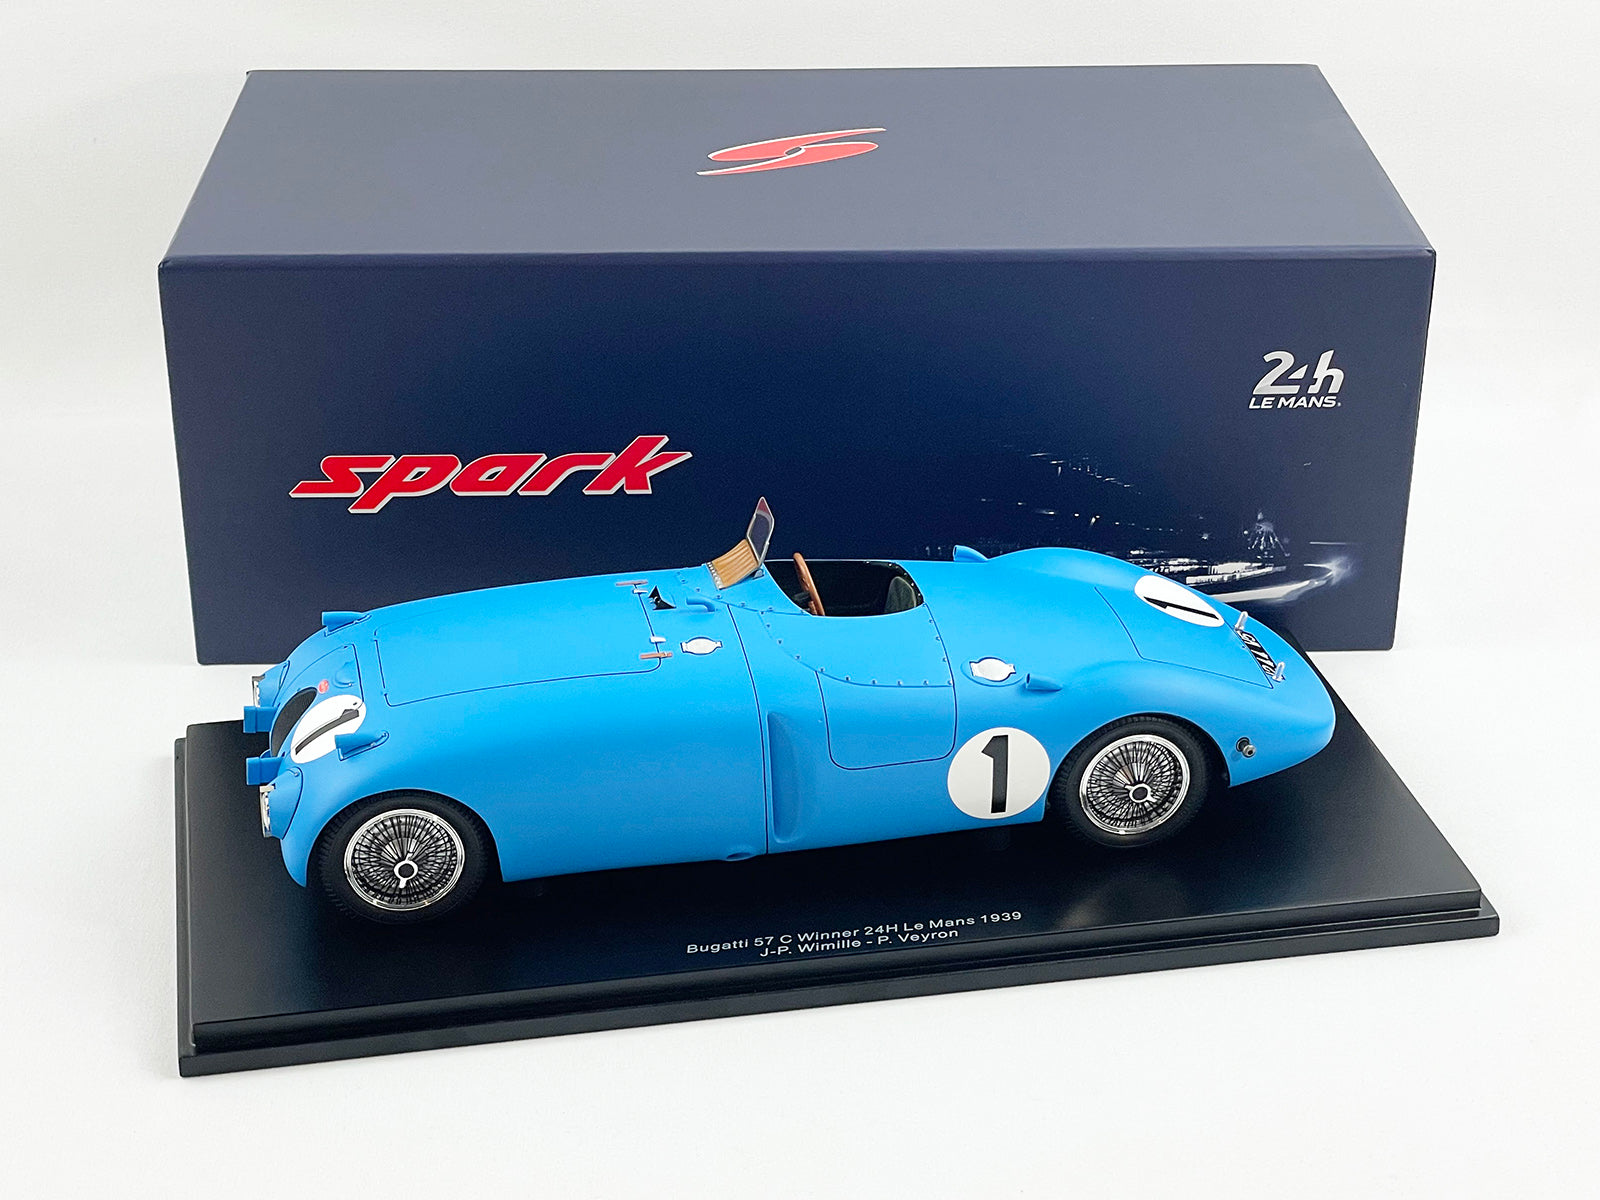 24h Le Mans 1939 Winner Bugatti #1 57C Tank Spider 1:18 Spark 18LM39  J.P.Wimille